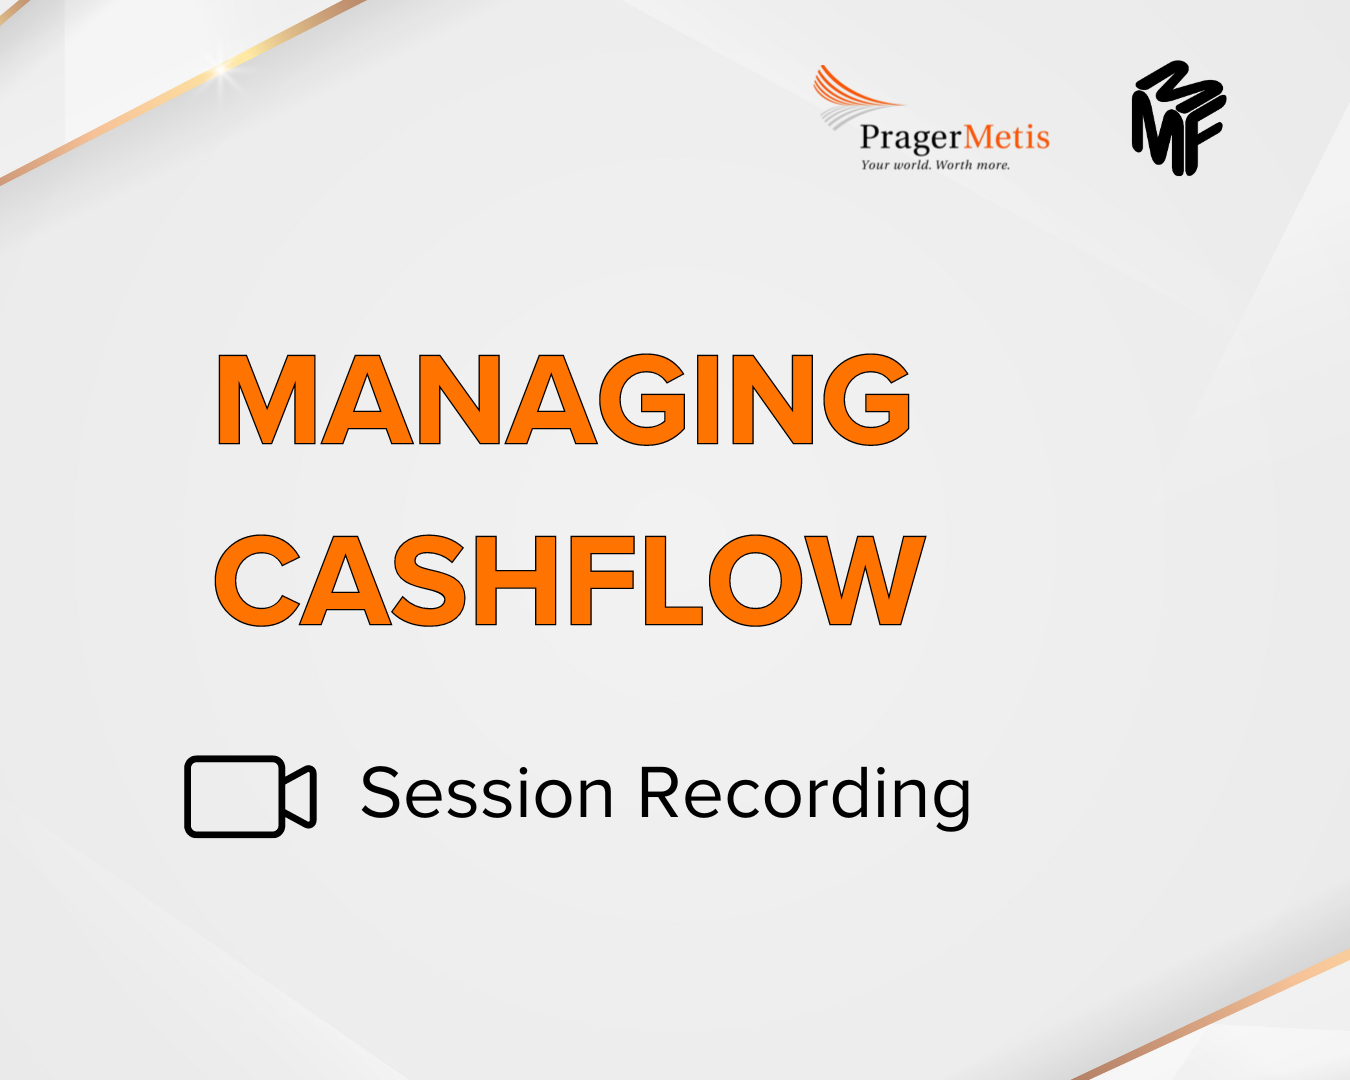 MMF Managing Cashflow Session